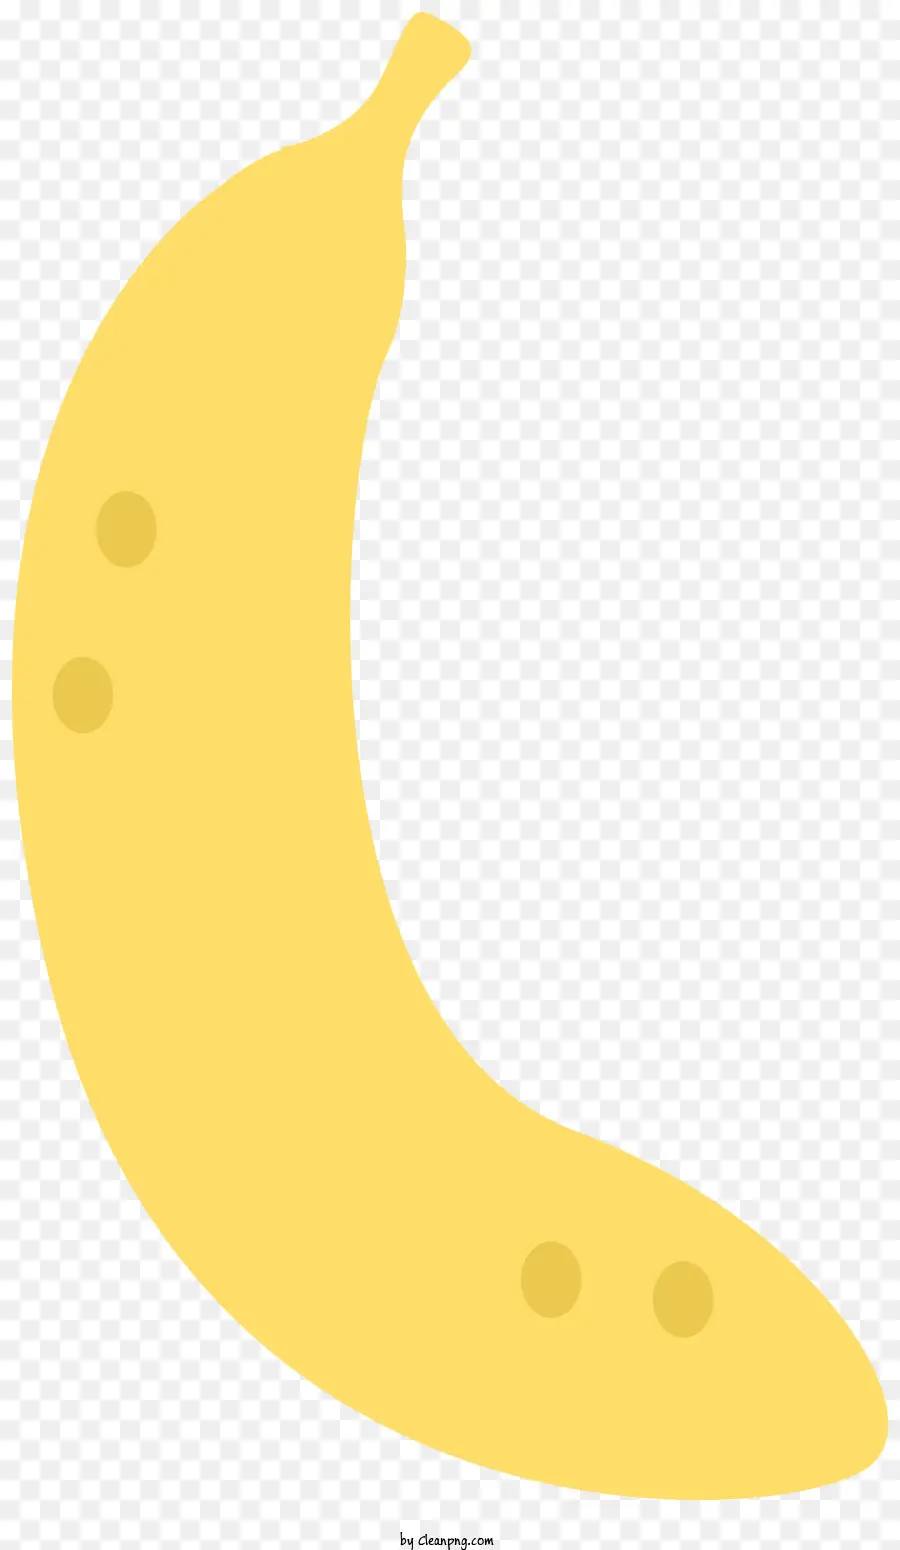 banana tropical fruit yellow banana curved banana banana recipes